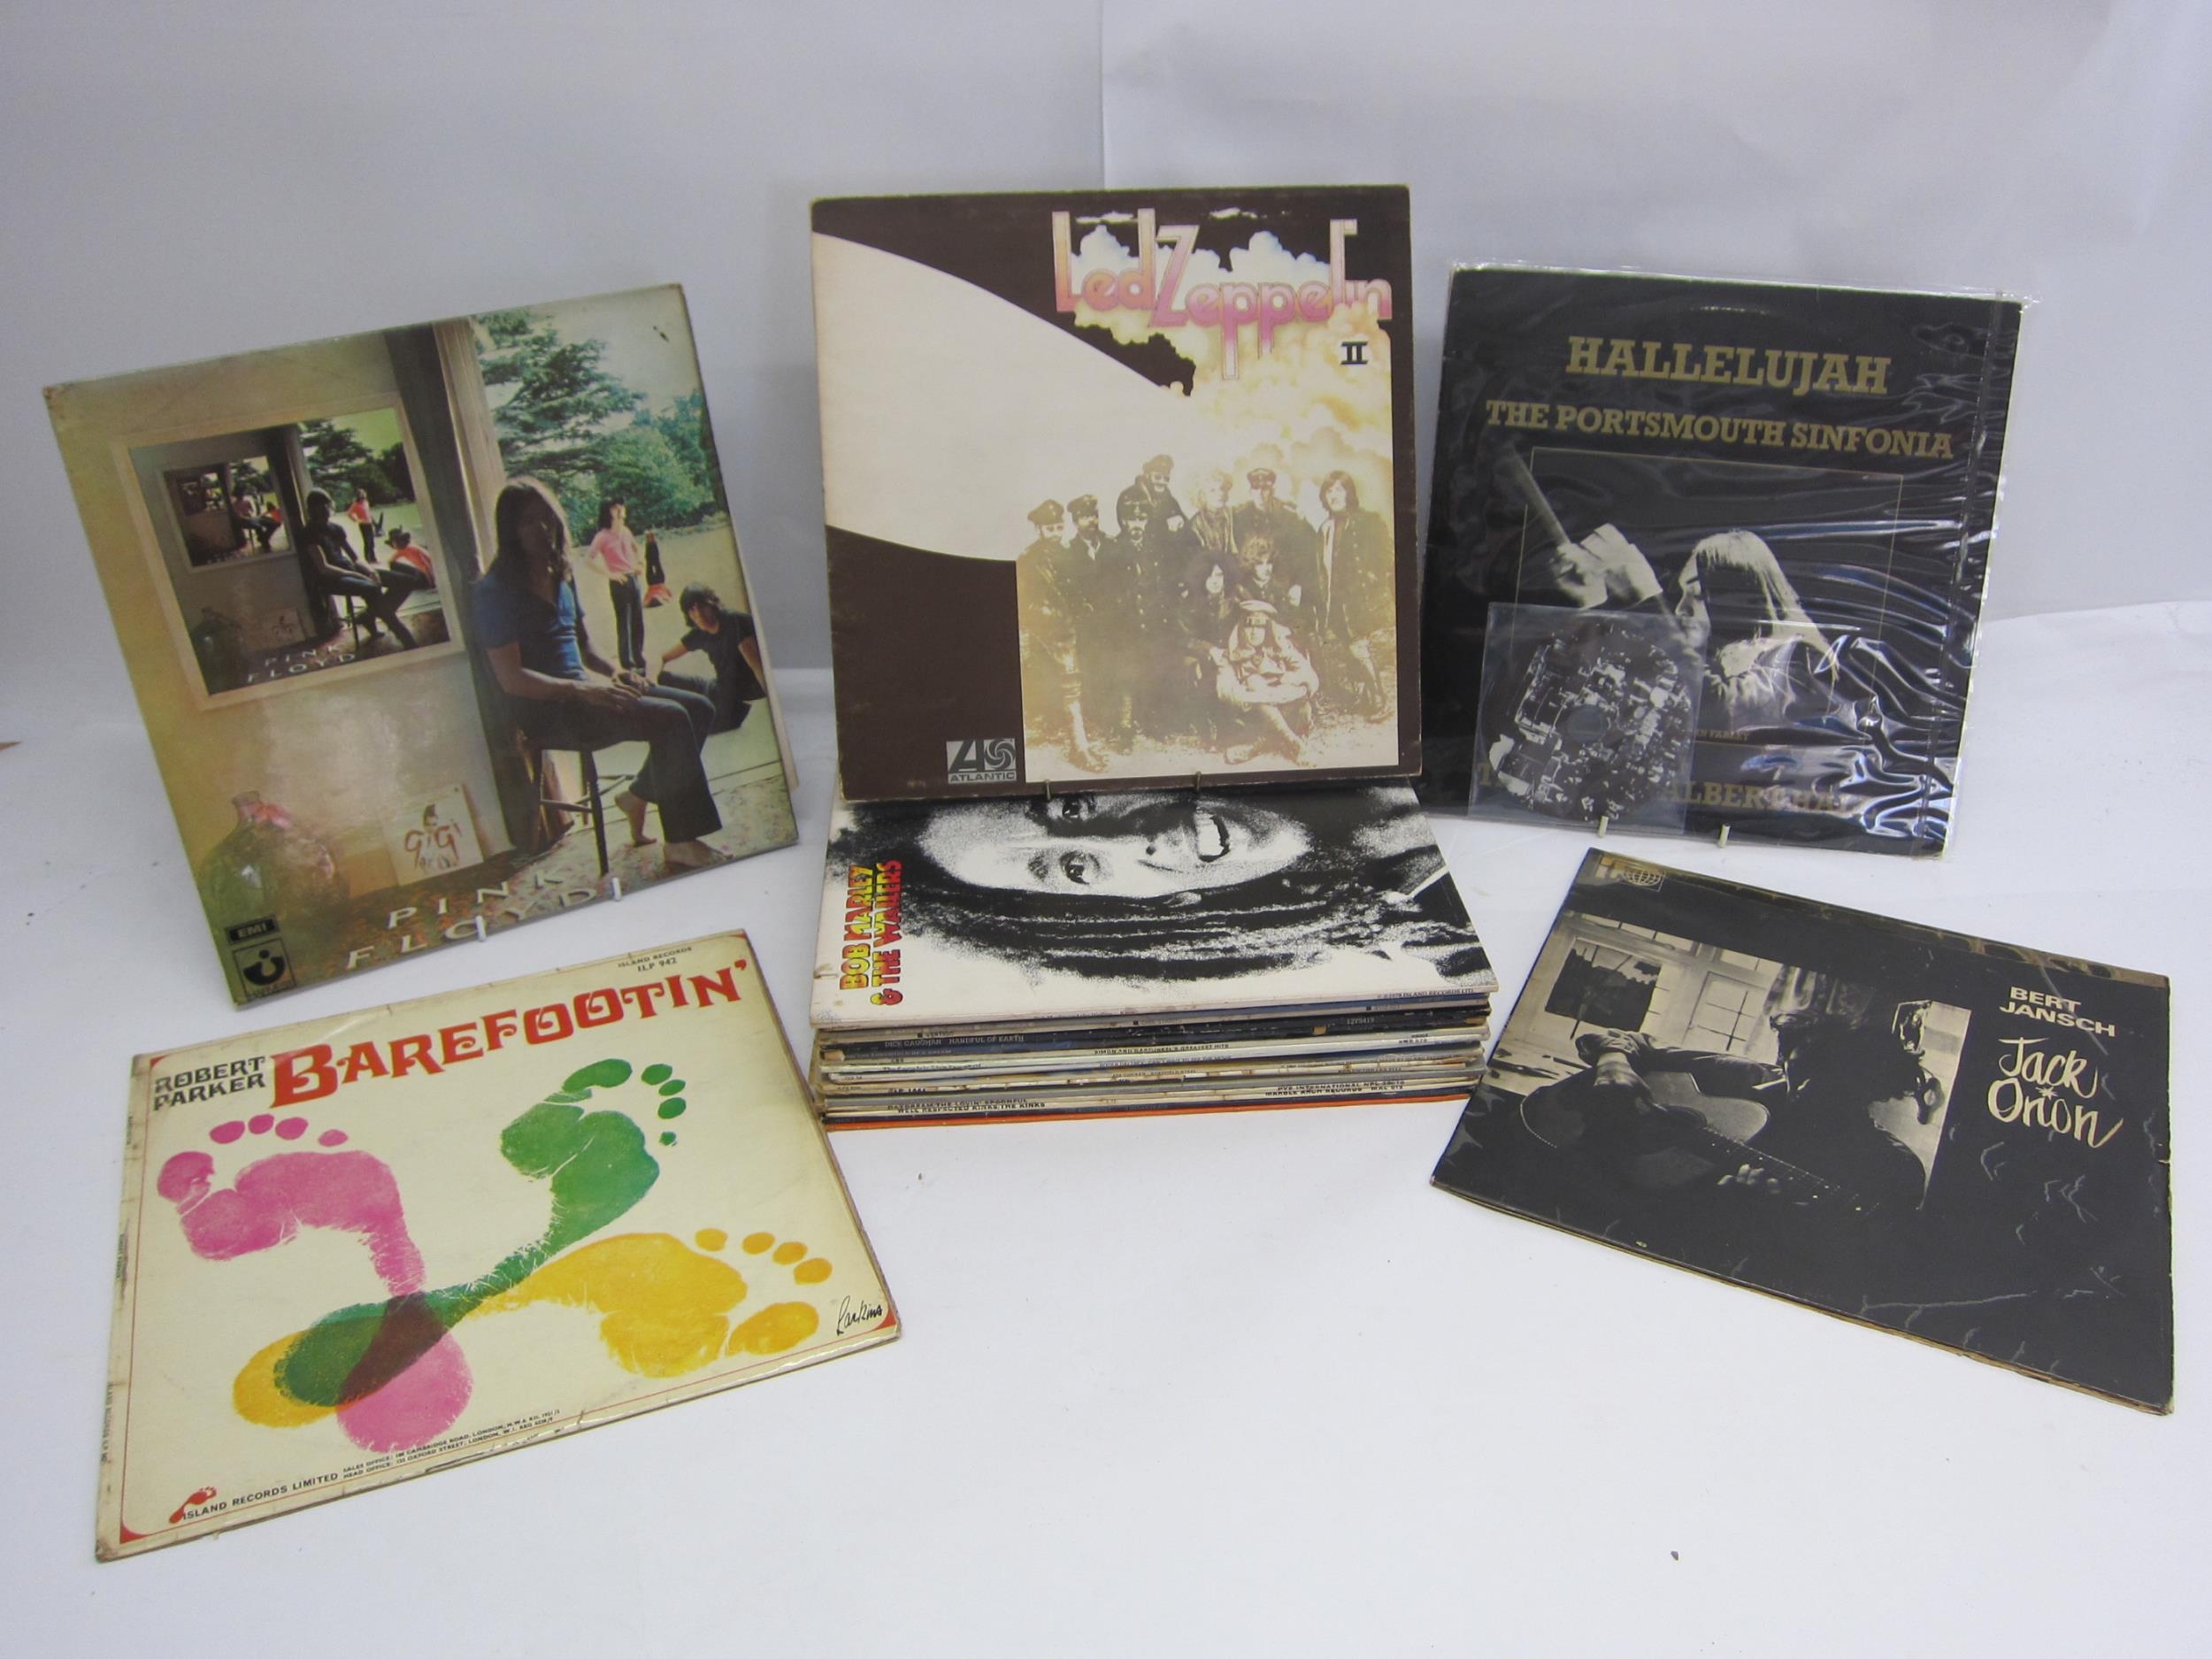 Assorted Rock, Pop, Folk and other LPs including Led Zeppelin 'Led Zeppelin II' (5881988, plum